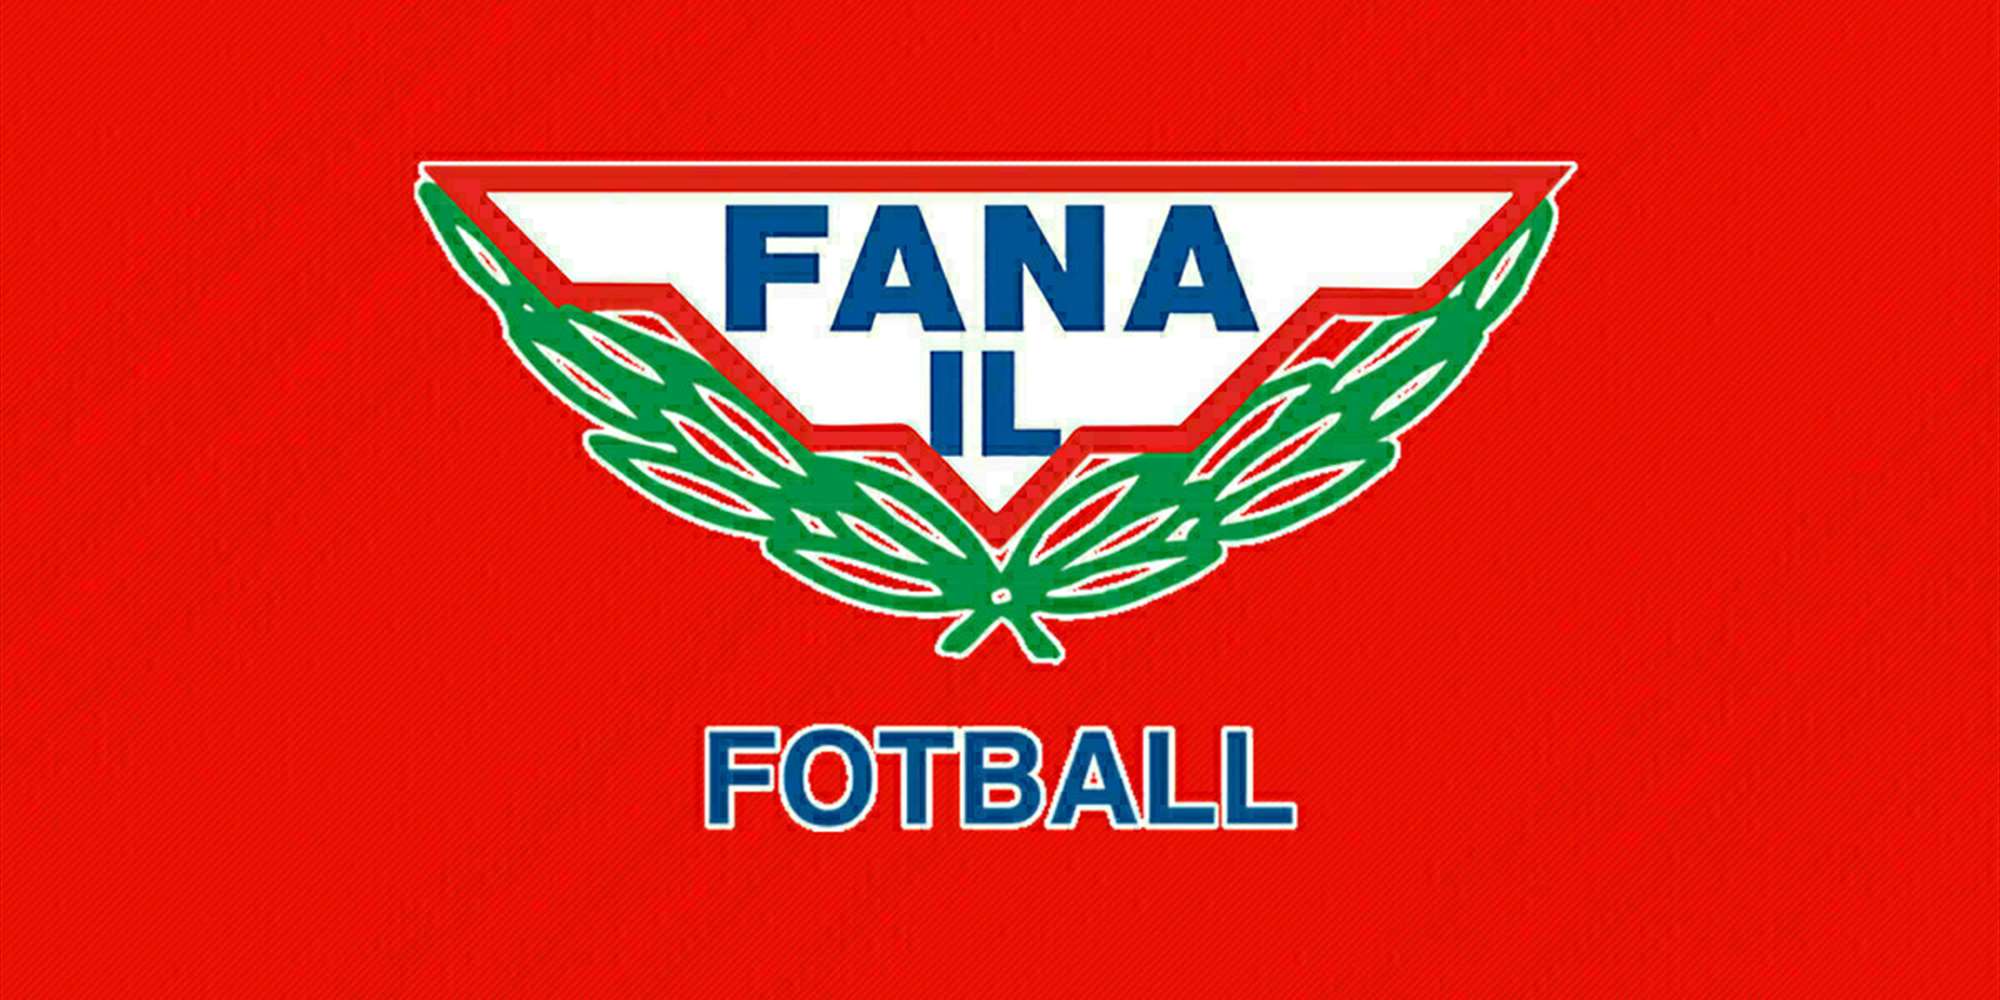 Fana Tine Fotballskole